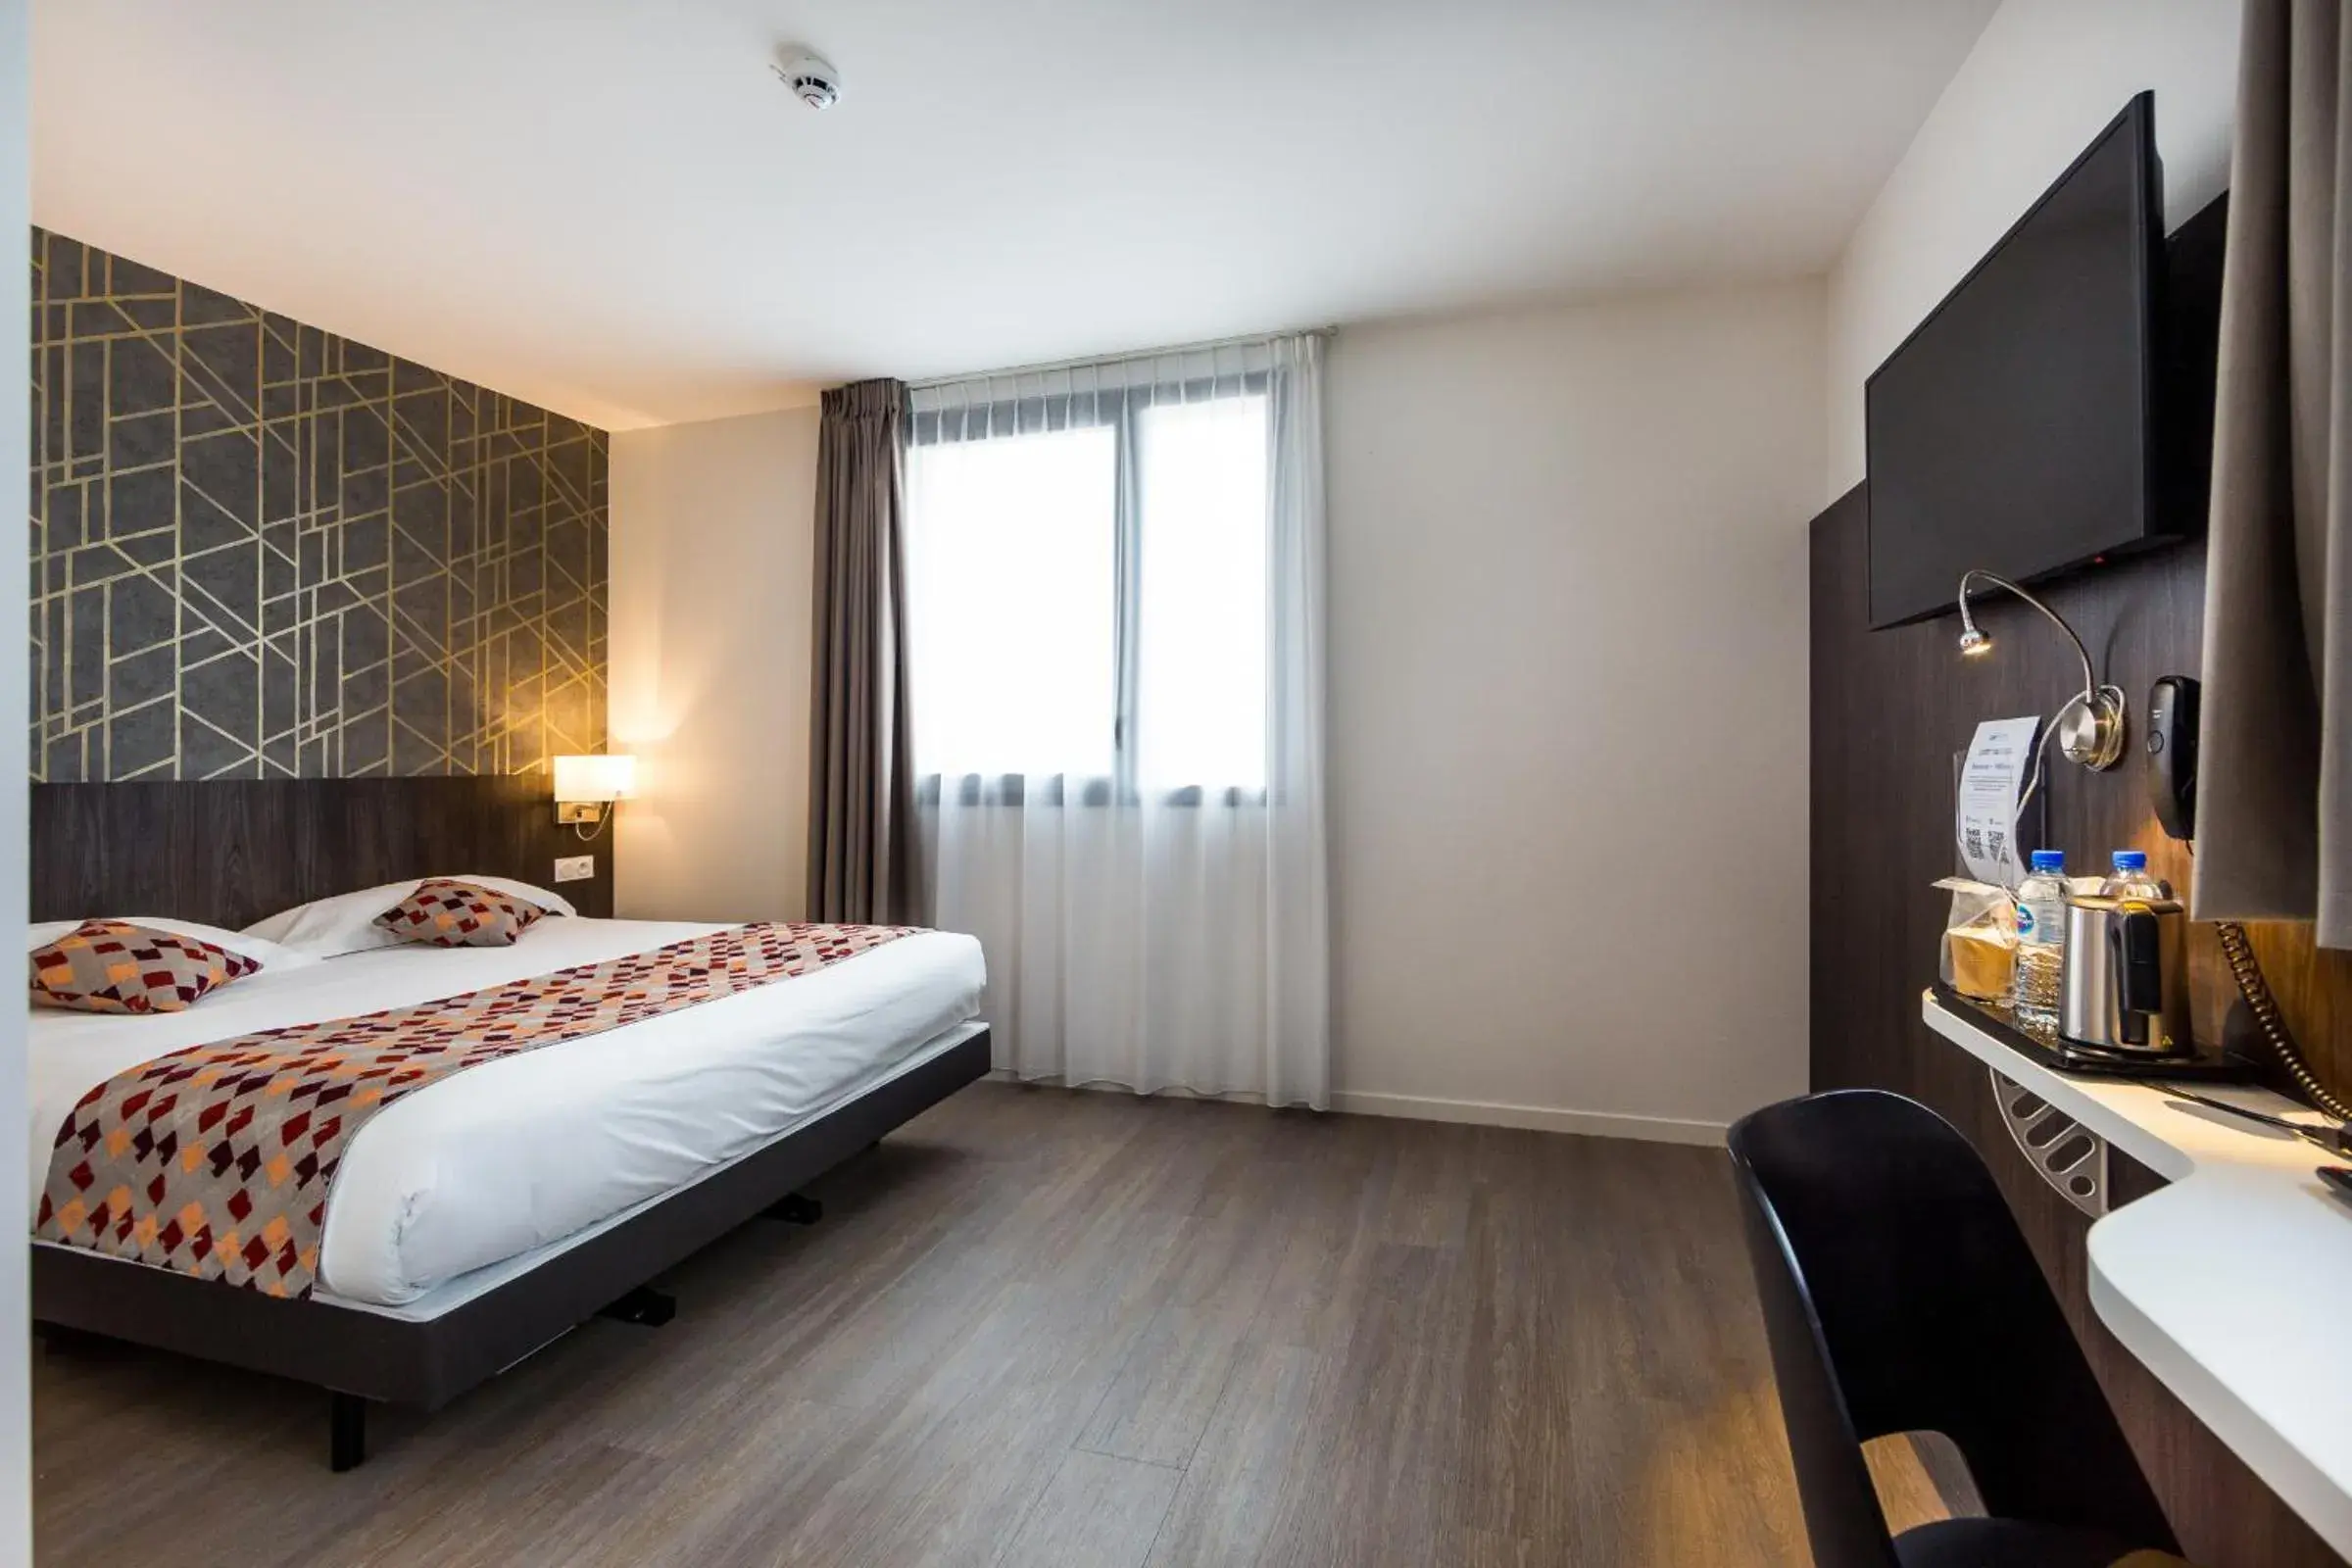 Photo of the whole room in Brit Hotel Ploermel - Hotel de l'Hippodrome